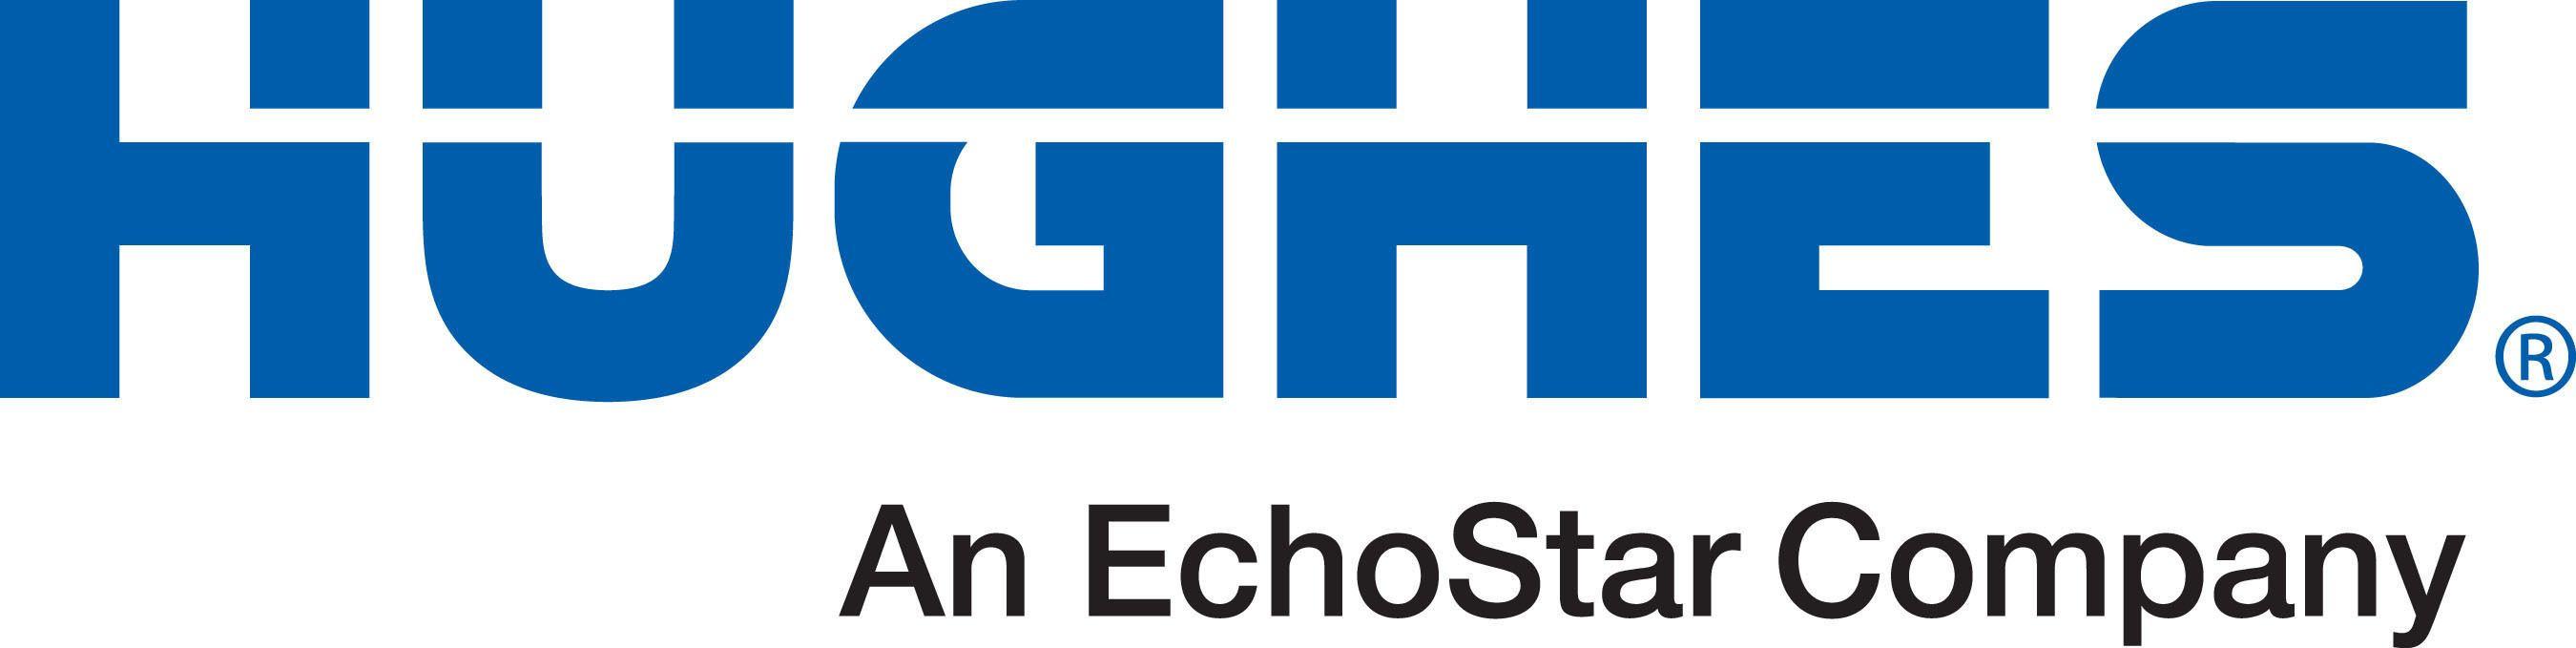 Telesat Logo - Hughes and Telesat Sign Agreement for High-Throughput Capacity on ...